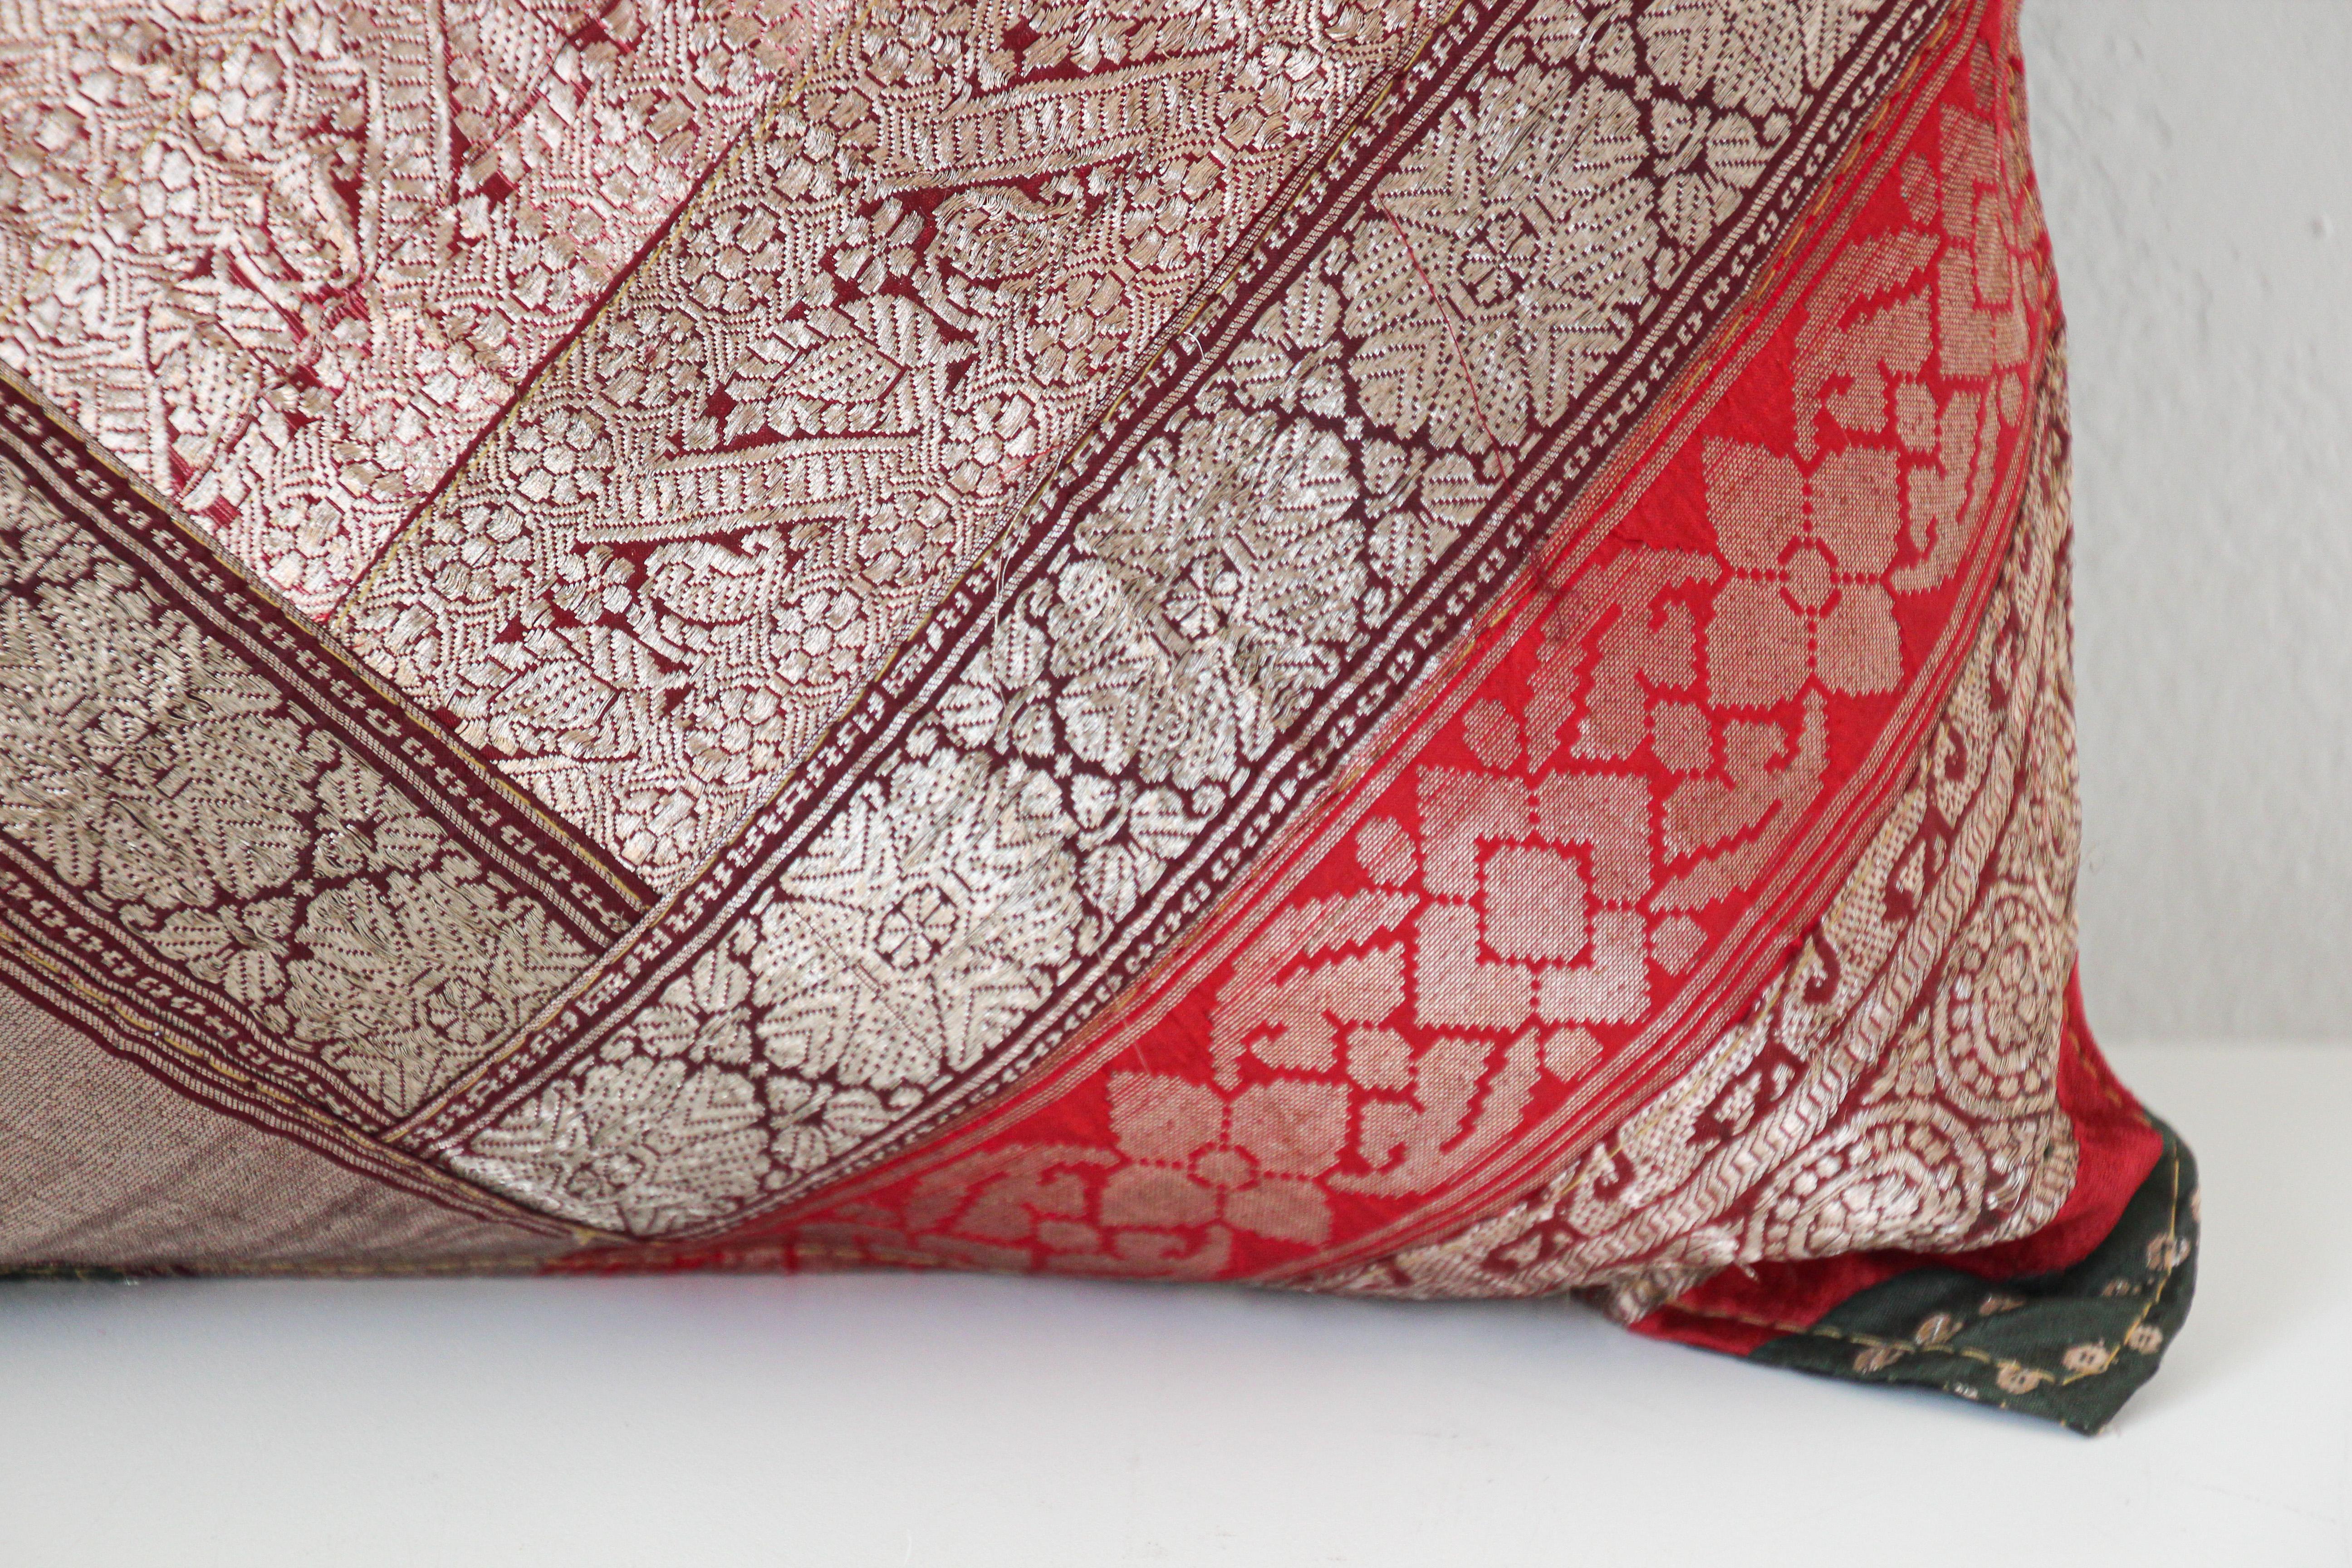 Moorish Decorative Vintage Throw Pillow Made from Sari Borders, India For Sale